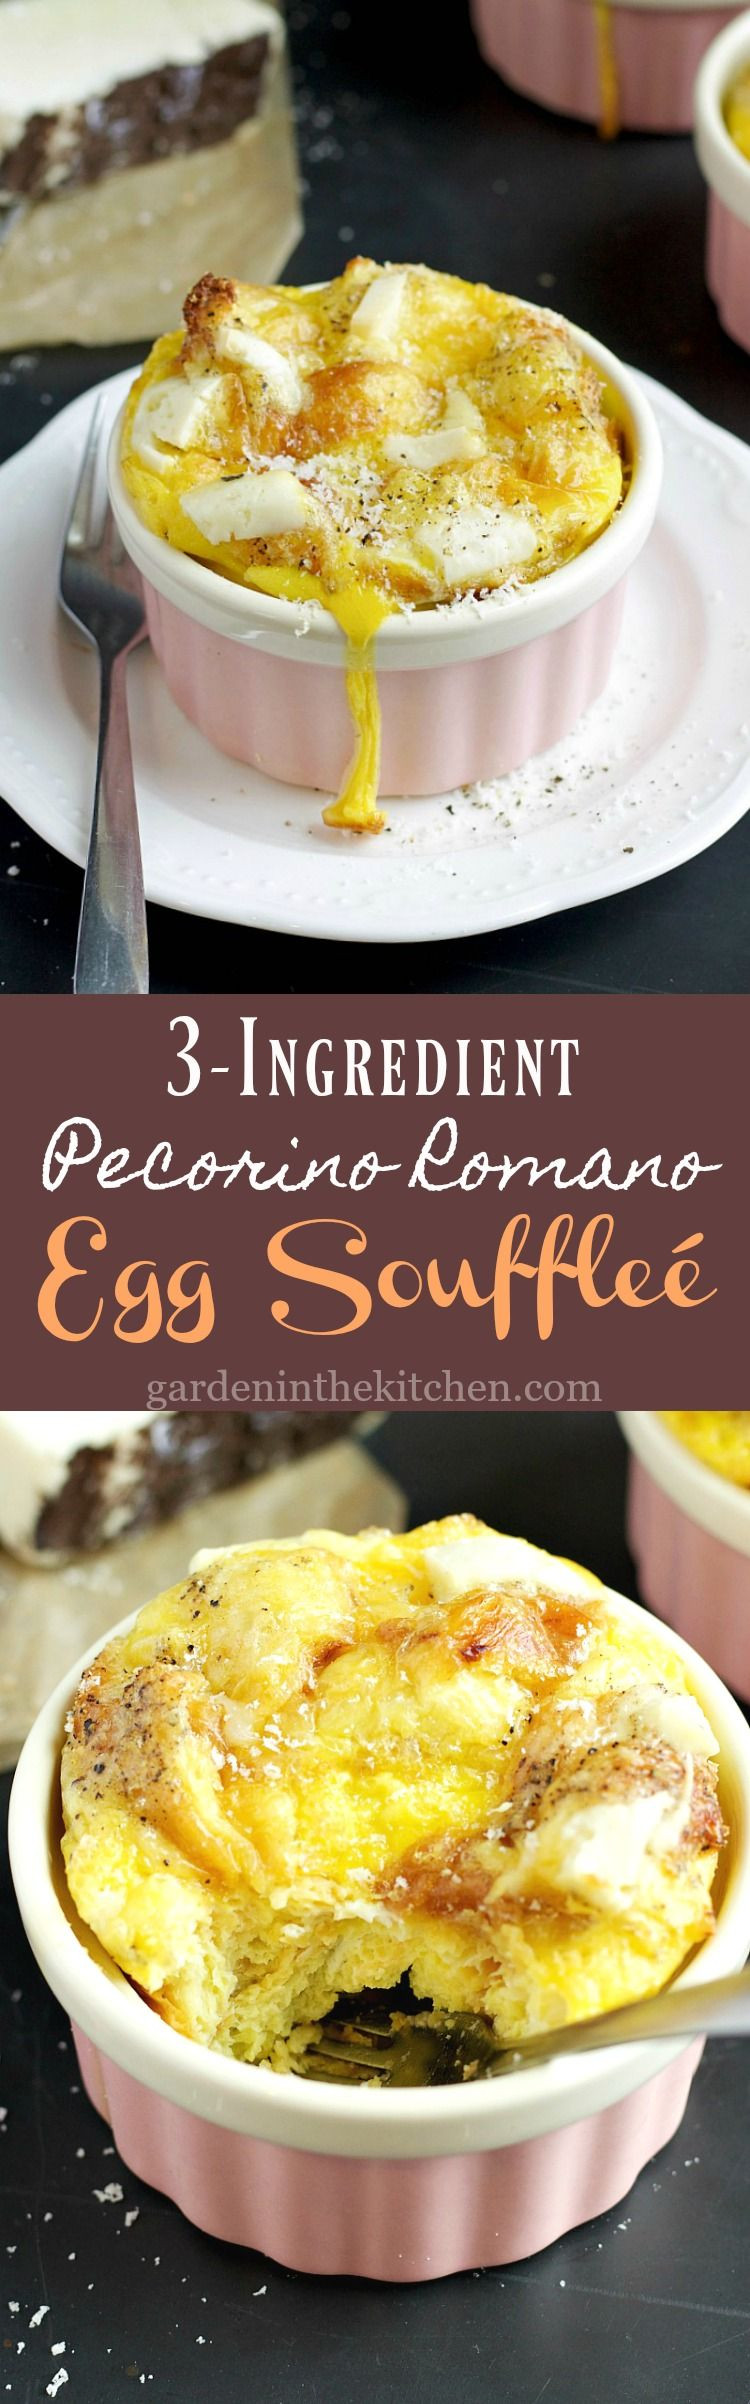 Egg Souffle Recipes Breakfast
 Easy 3 Ingre nt Egg Soufflé Recipe